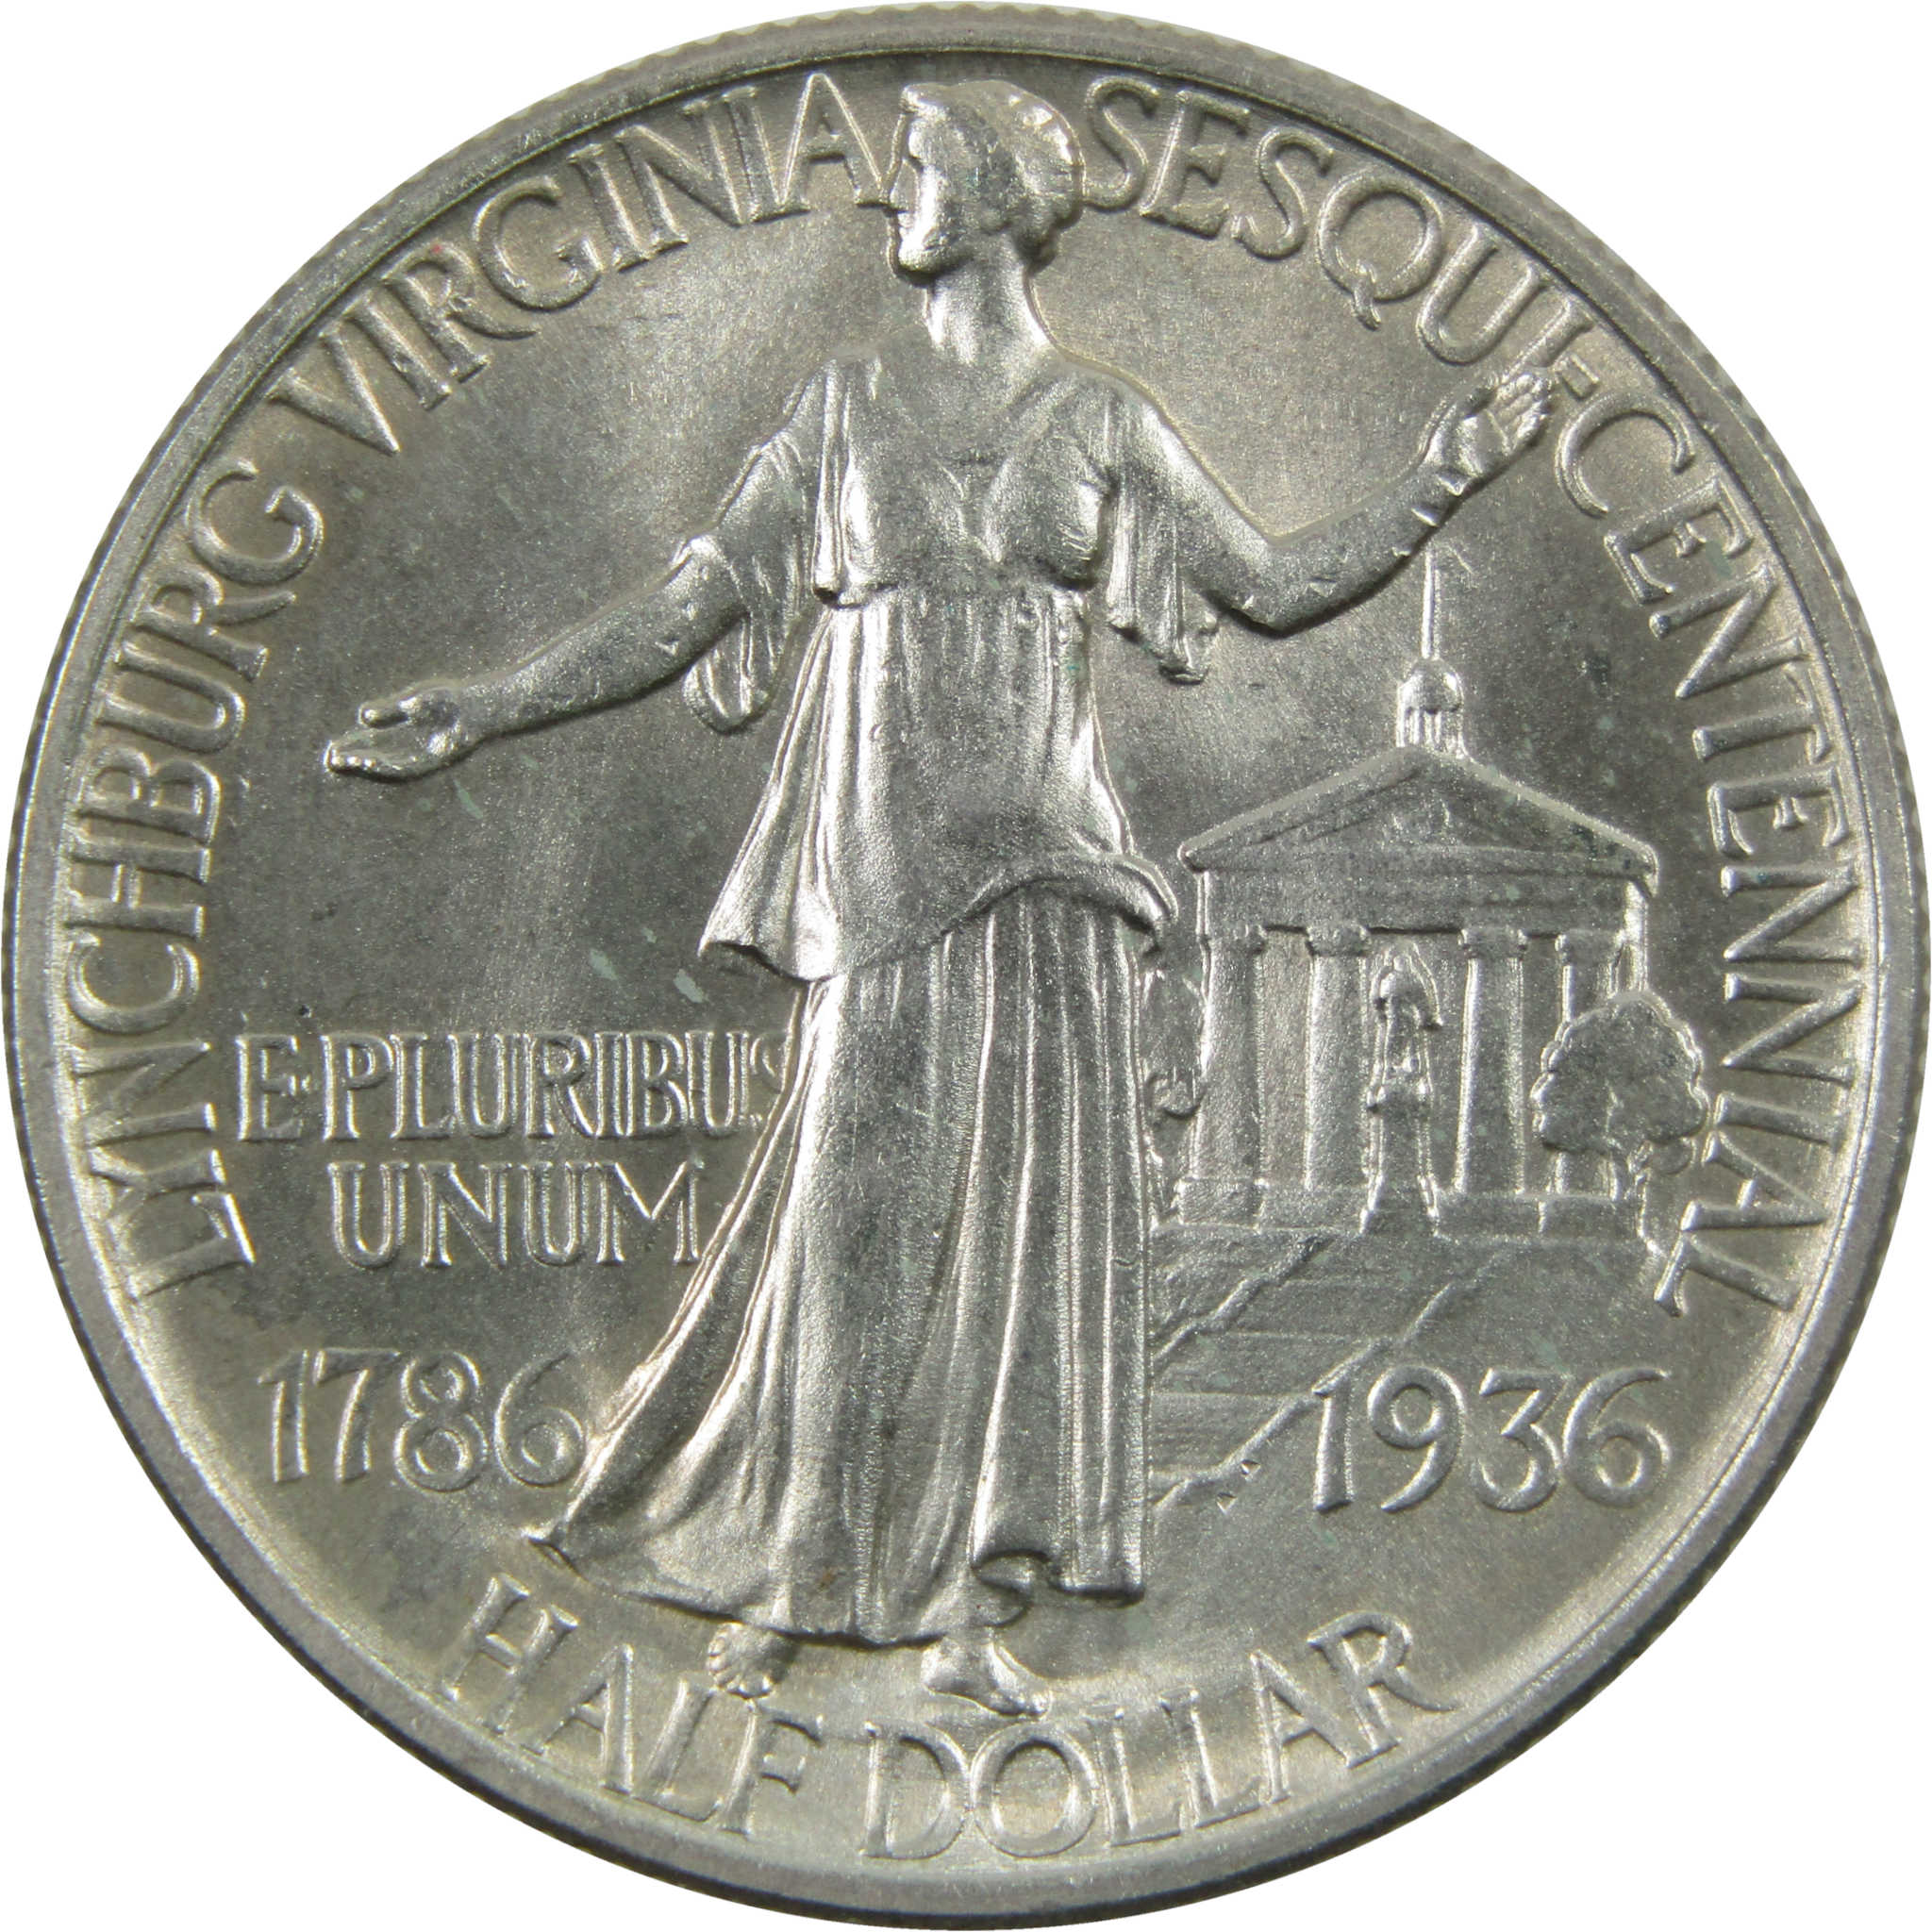 Lynchburg Virginia Commemorative Half Dollar 1936 About Unc SKU:I4492